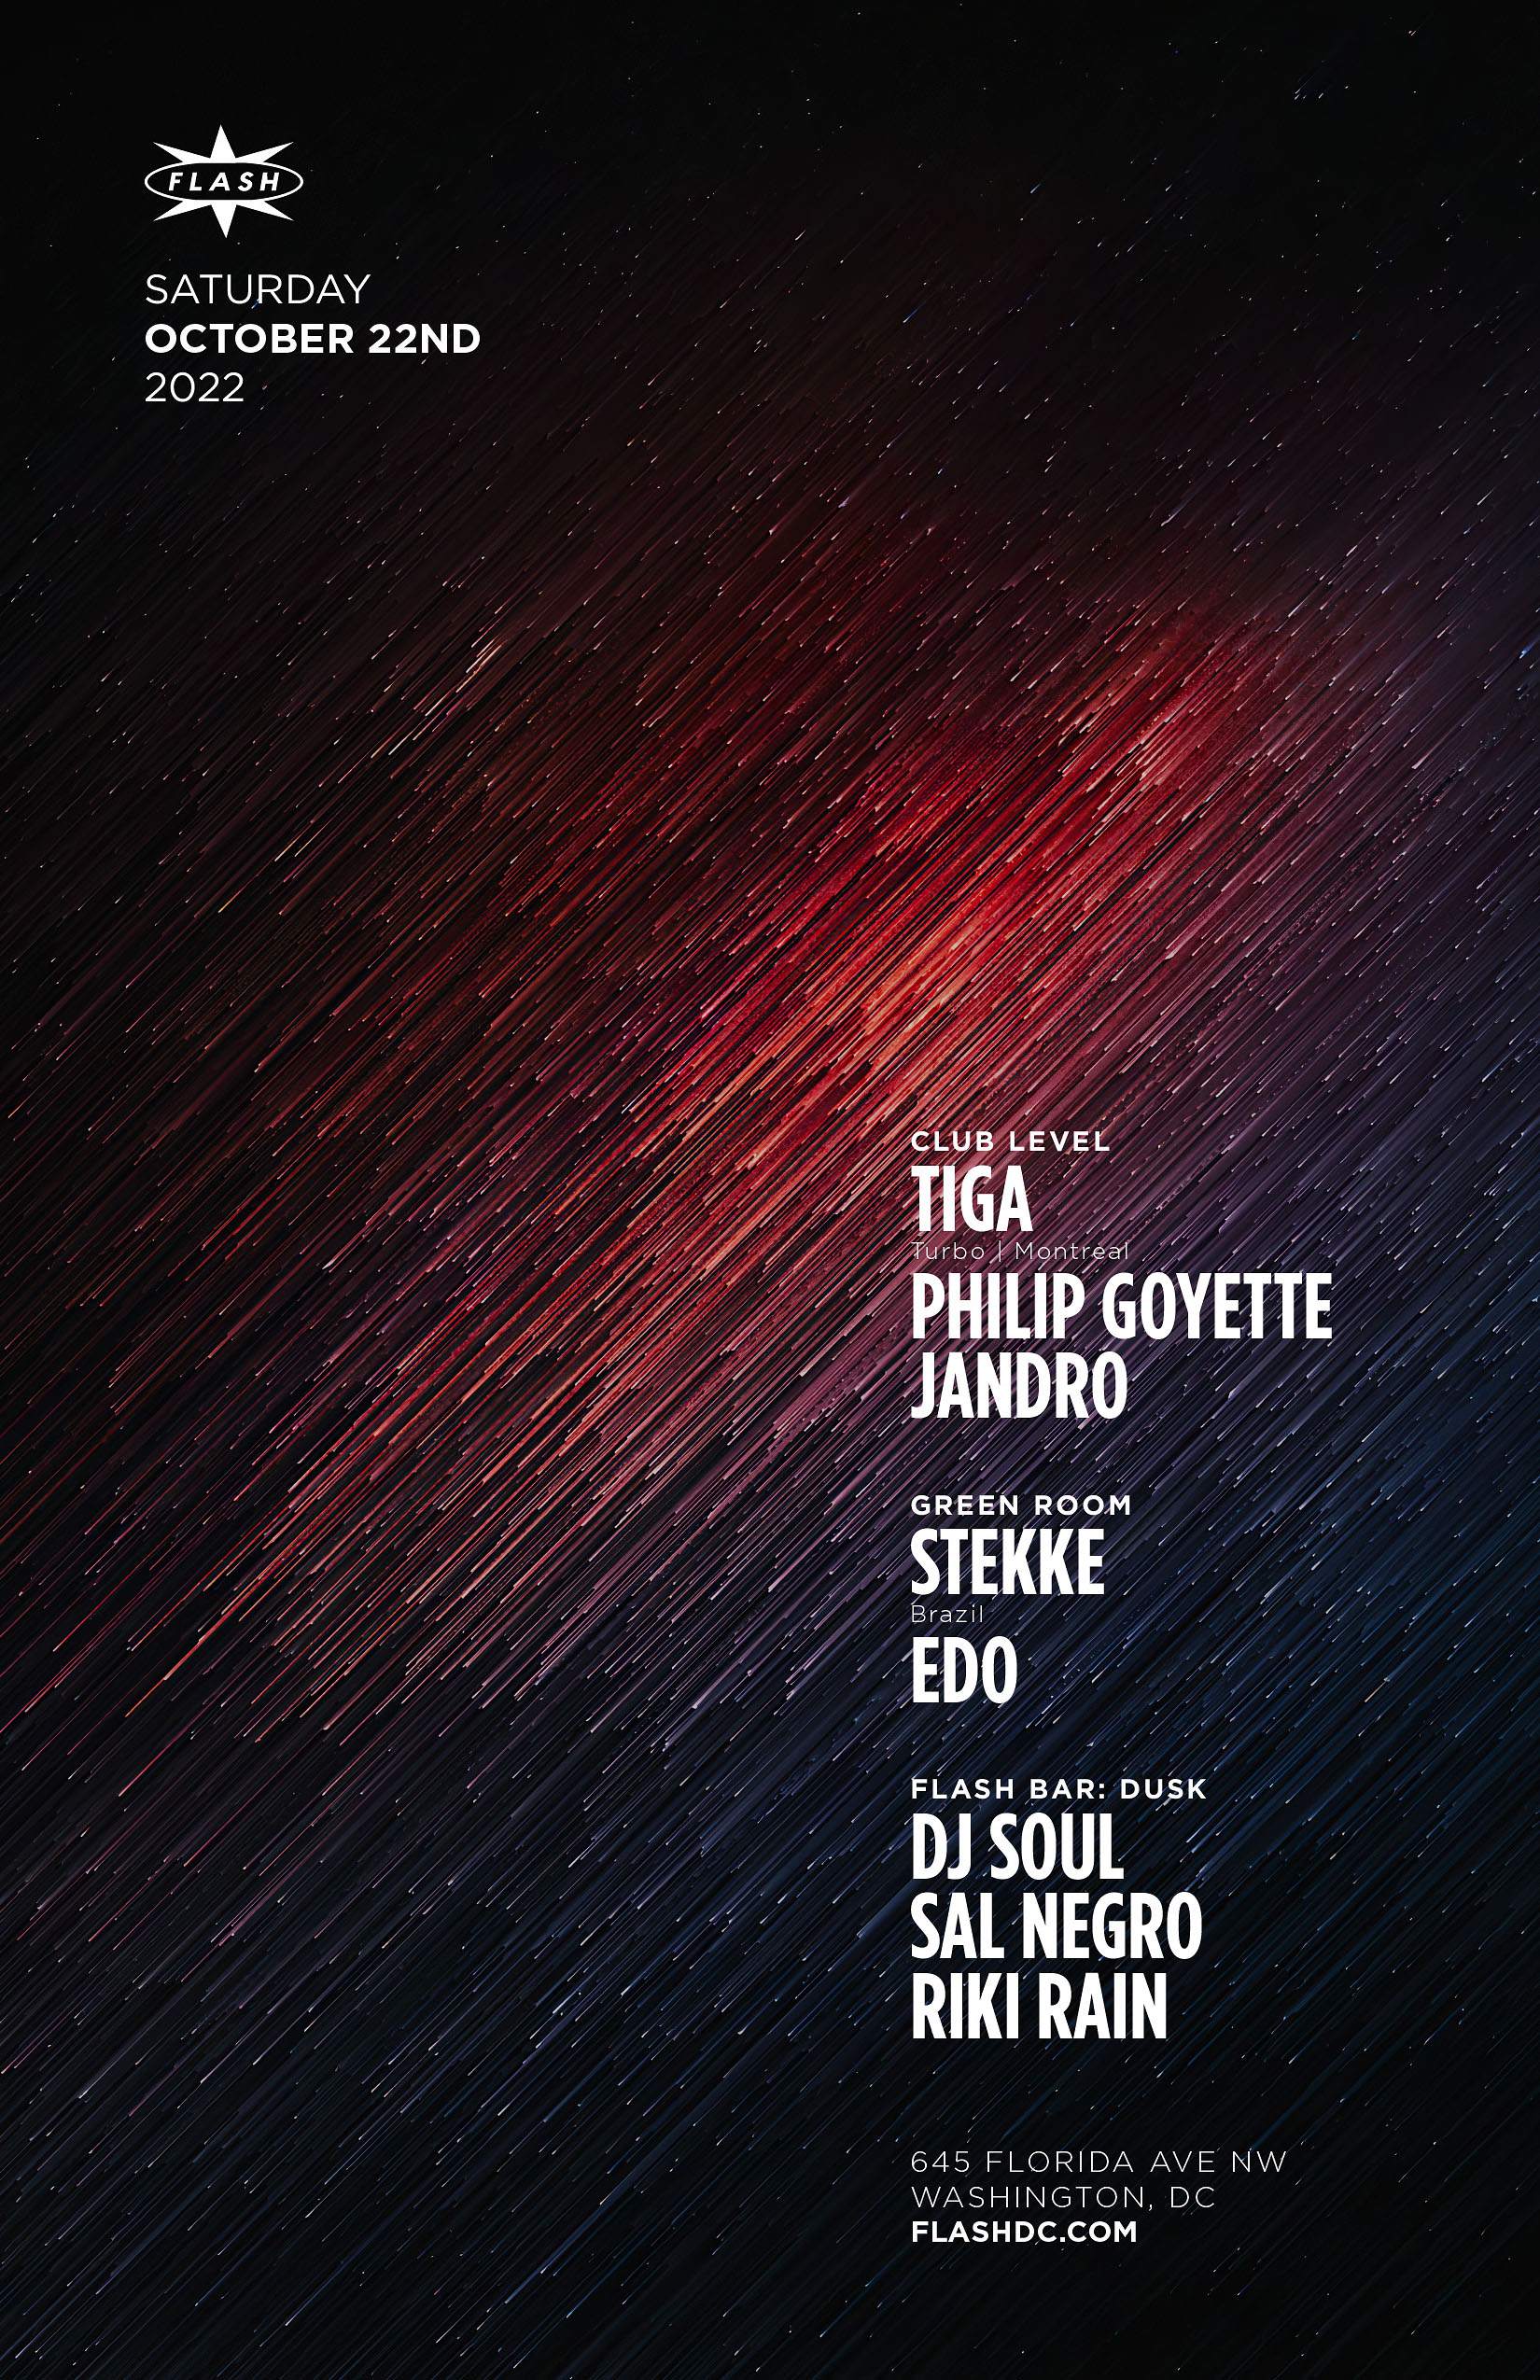 Tiga - Philip Goyette - Jandro - Stekke - Edo - Dusk: DJ Soul - Sal Negro - Riki Rain - フライヤー表